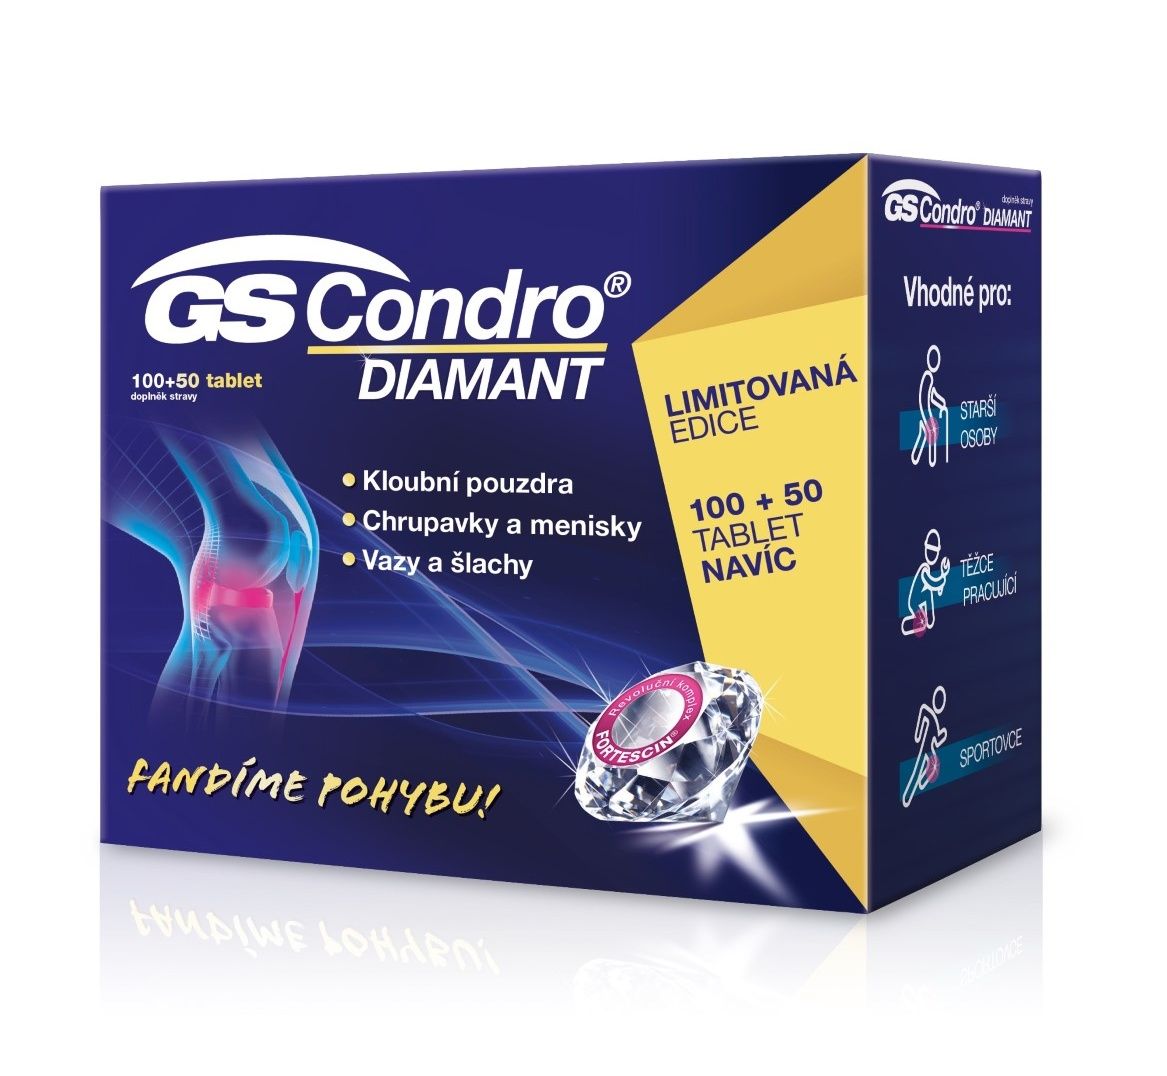 GS Condro Diamant 100+50 tablet limitovaná edice 2022 GS